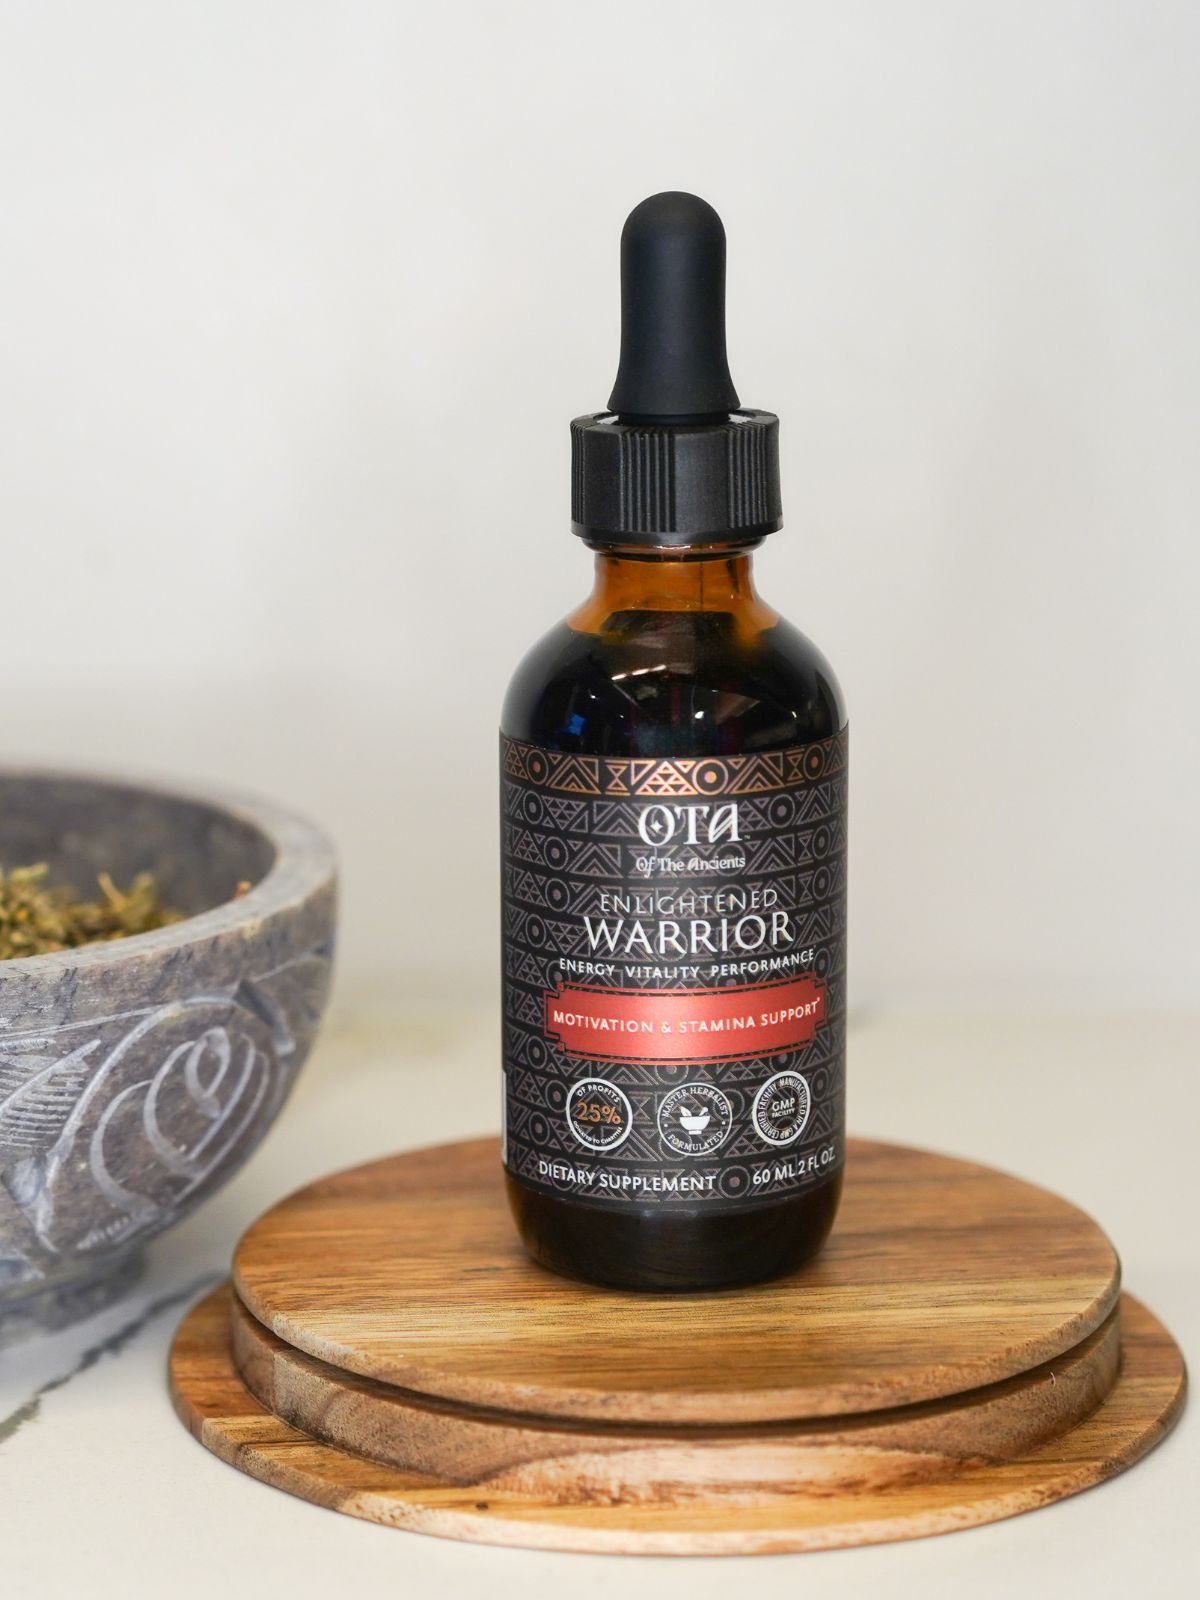 Enlightened Warrior liquid tincture supplement bottle standing on a wooden platform next to a pestle containing herbs.